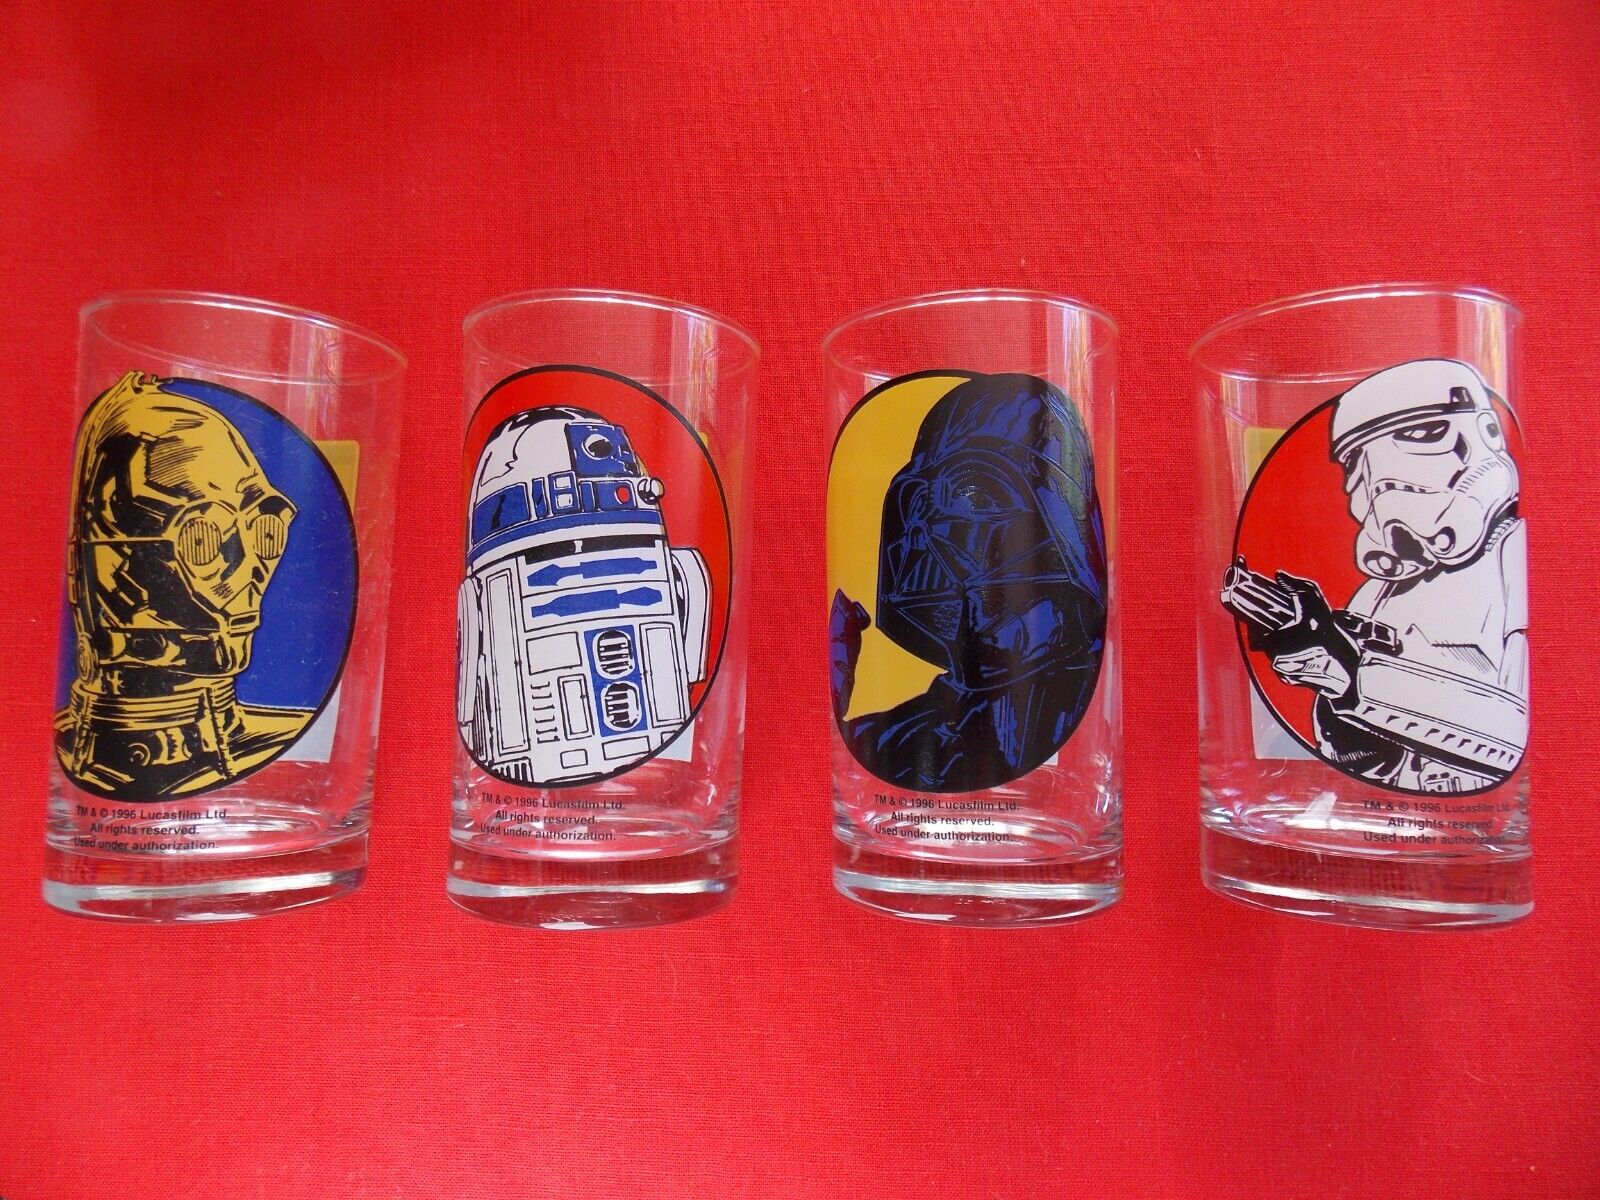 "The Star Wars Trilogy" Special Edition Glasses R2-D2, C-3PO, Vader & Trooper